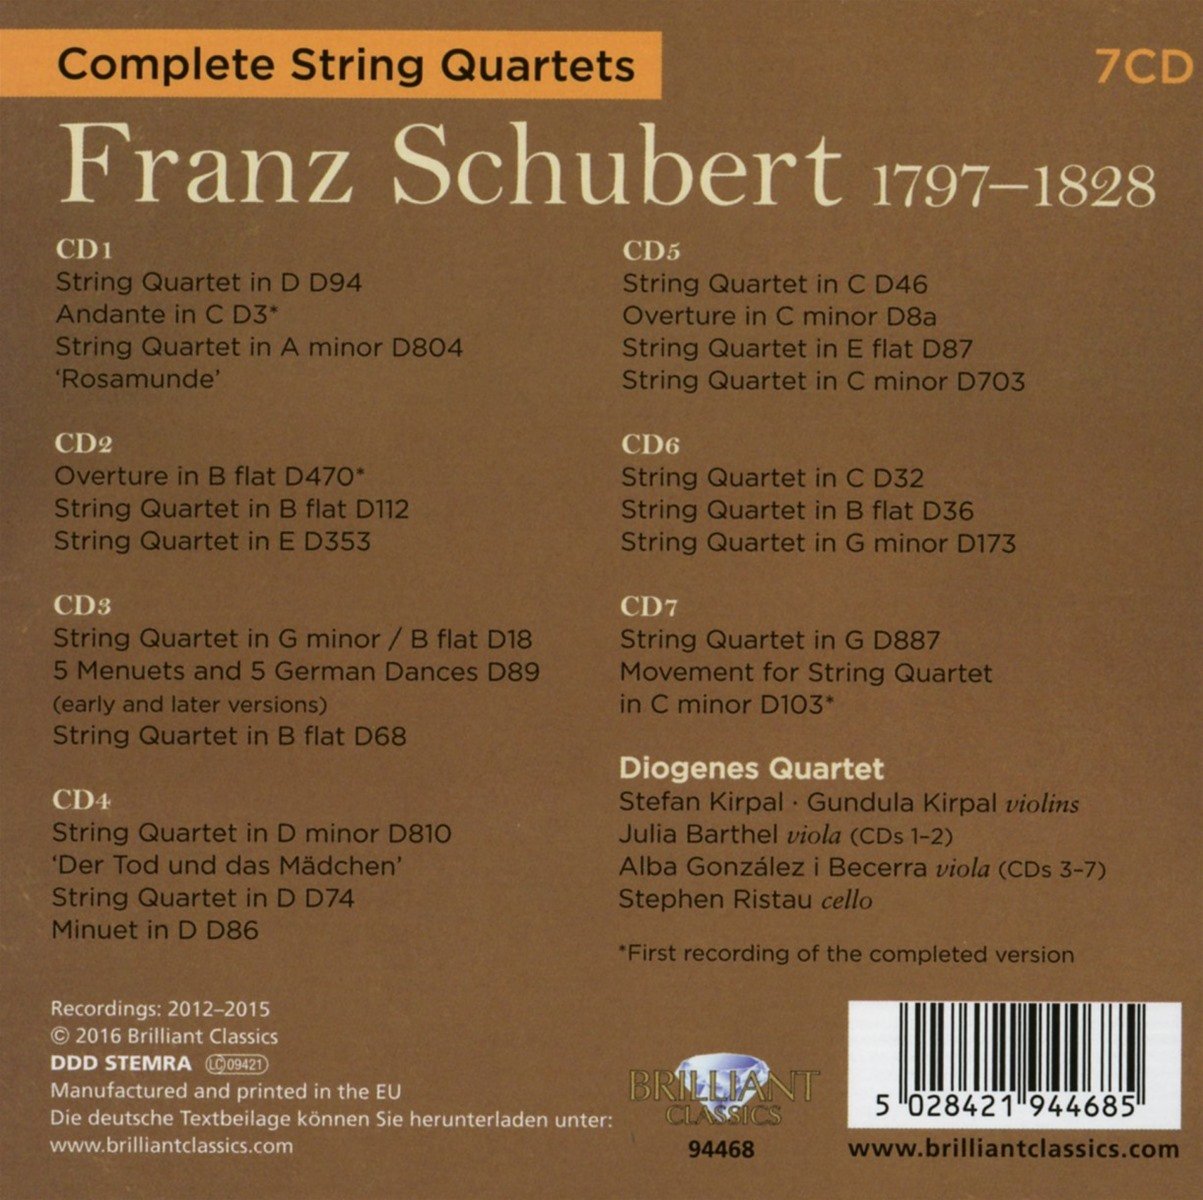 Schubert: String Quartets (Complete)